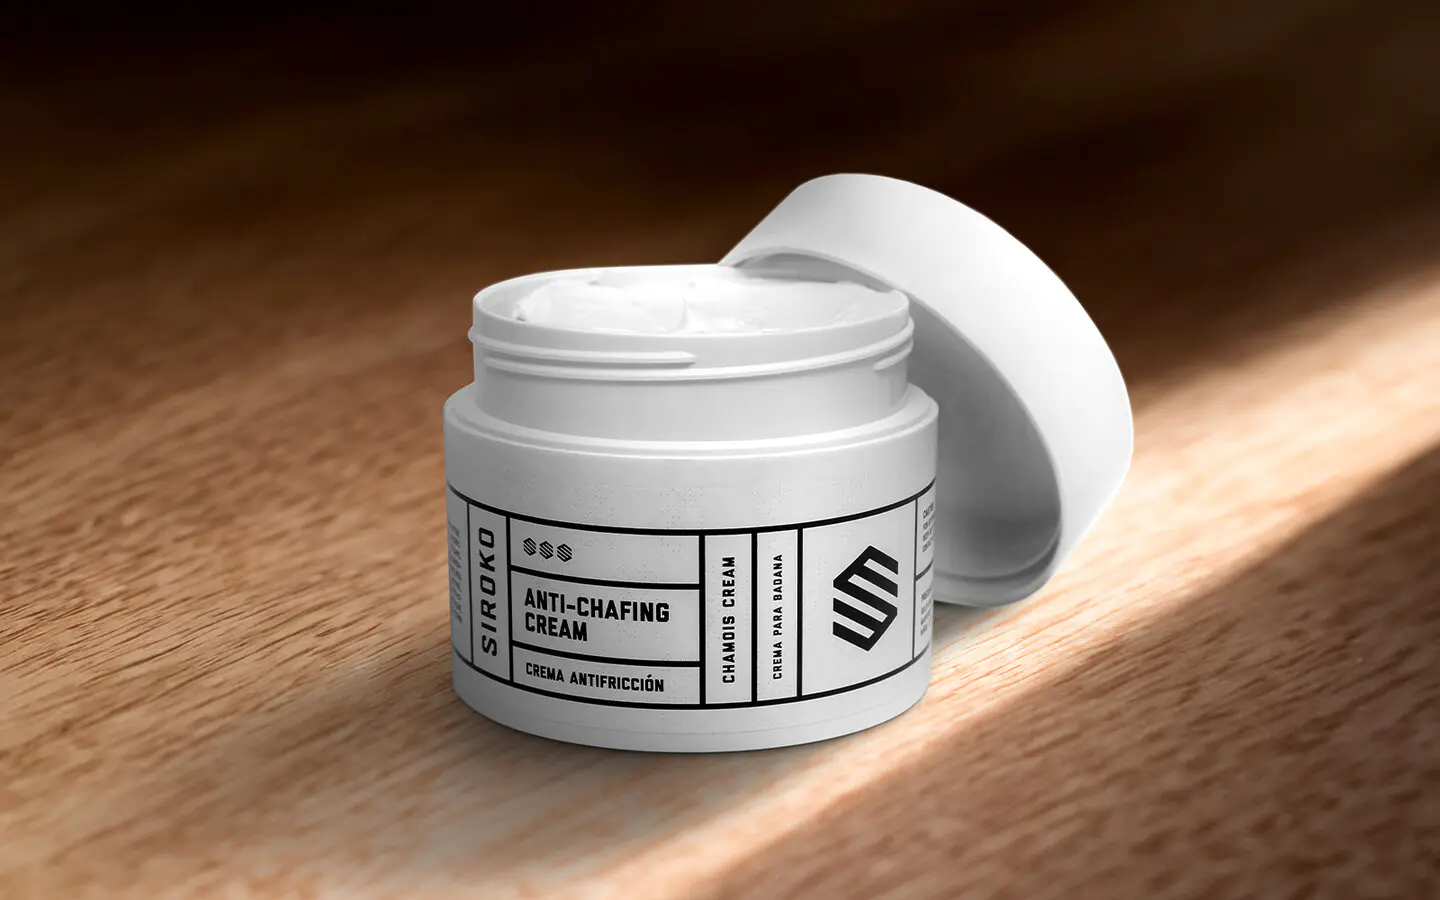 Siroko anti-chafing chamois cream: Benefits and usage – SIROKO